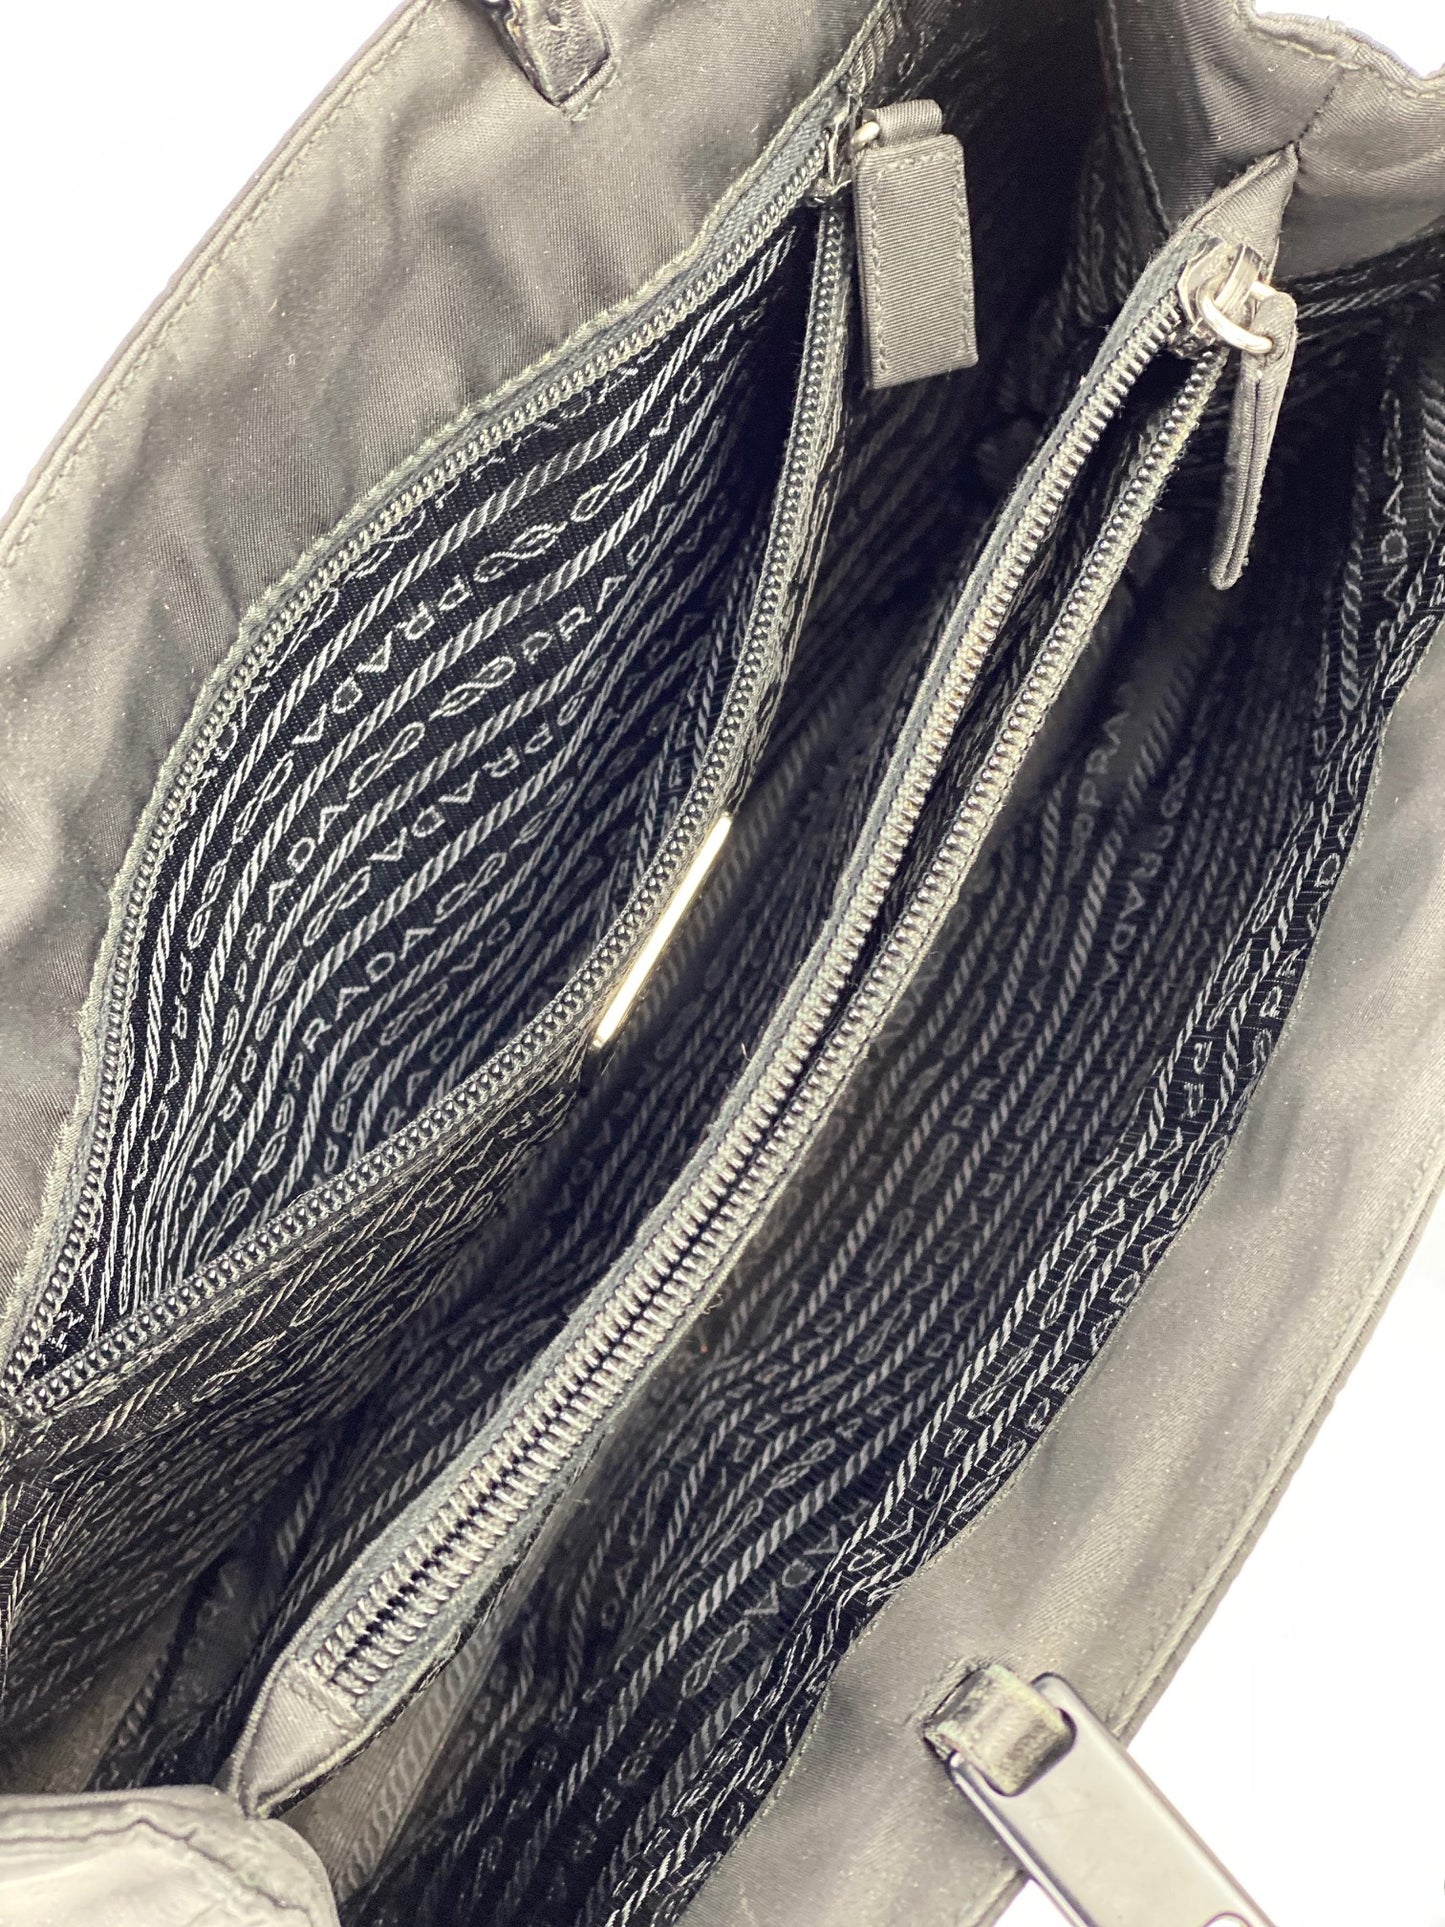 Prada Tessuto nylon tote with chain strap Shoulder Bag pre owned